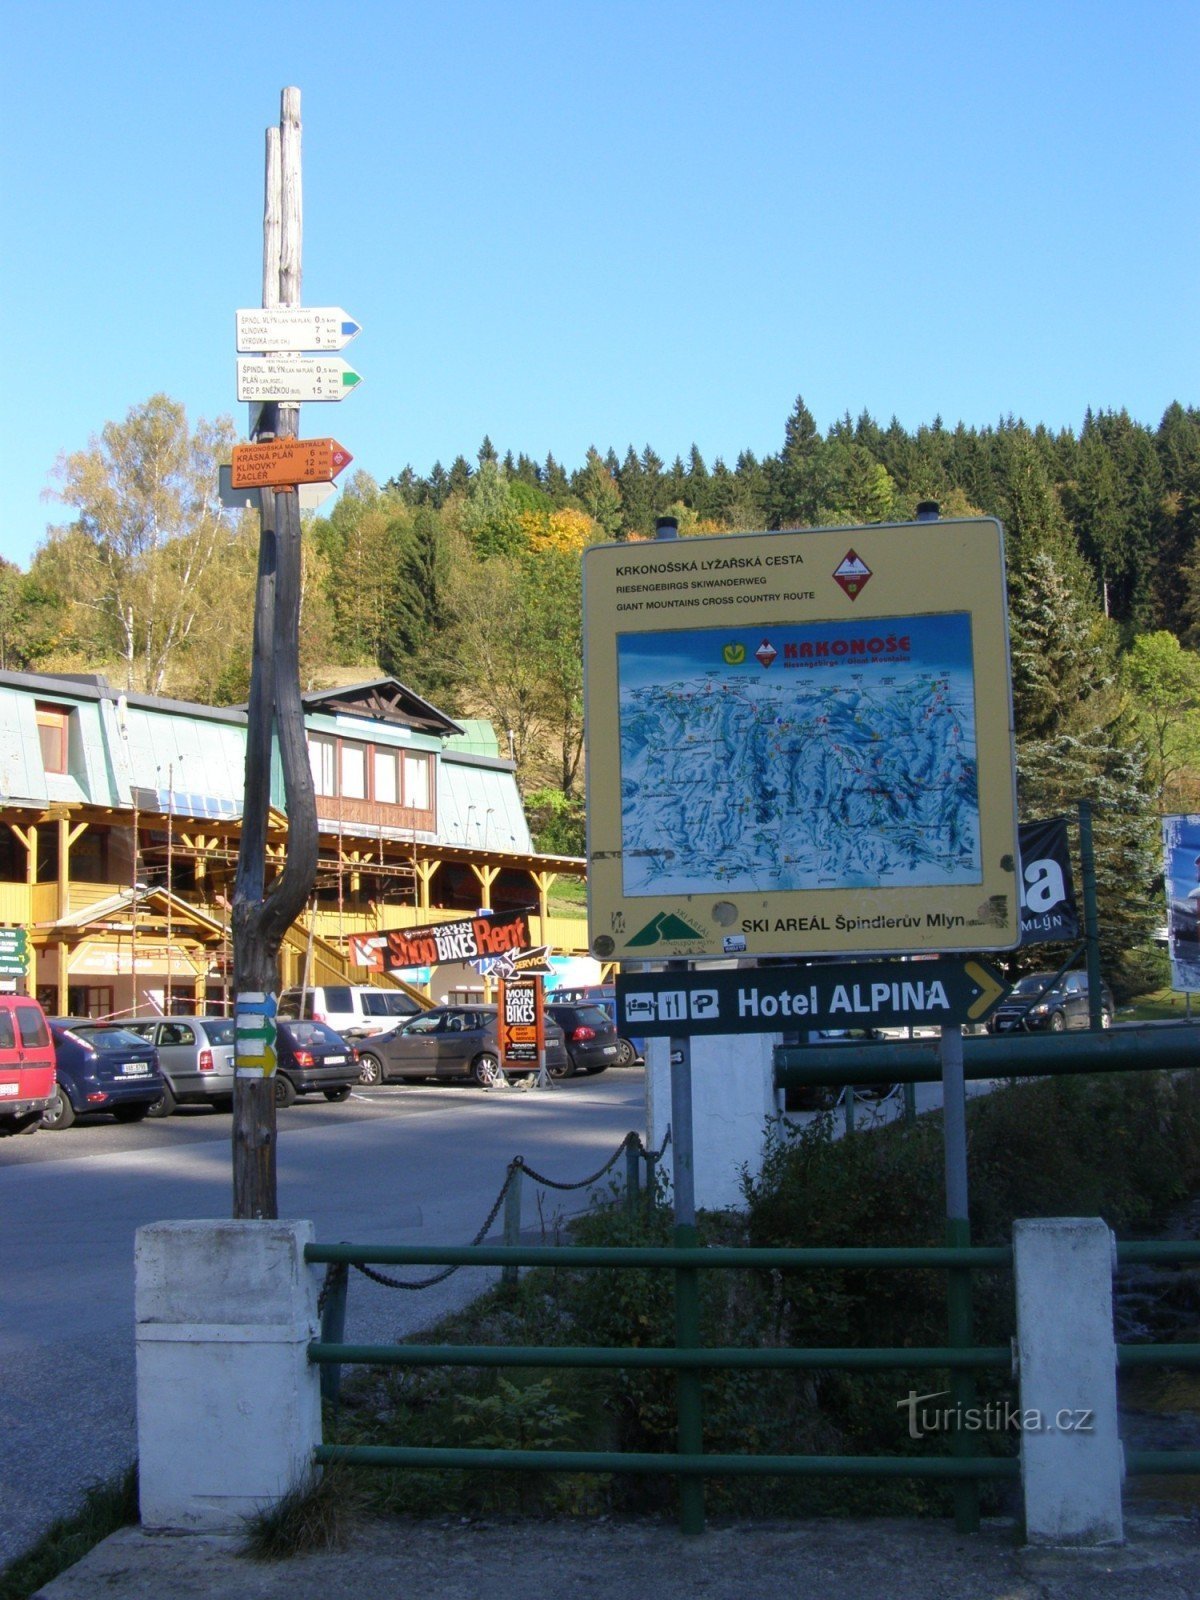 Špindlerův Mlýn cruzamento turístico - no centro de informações